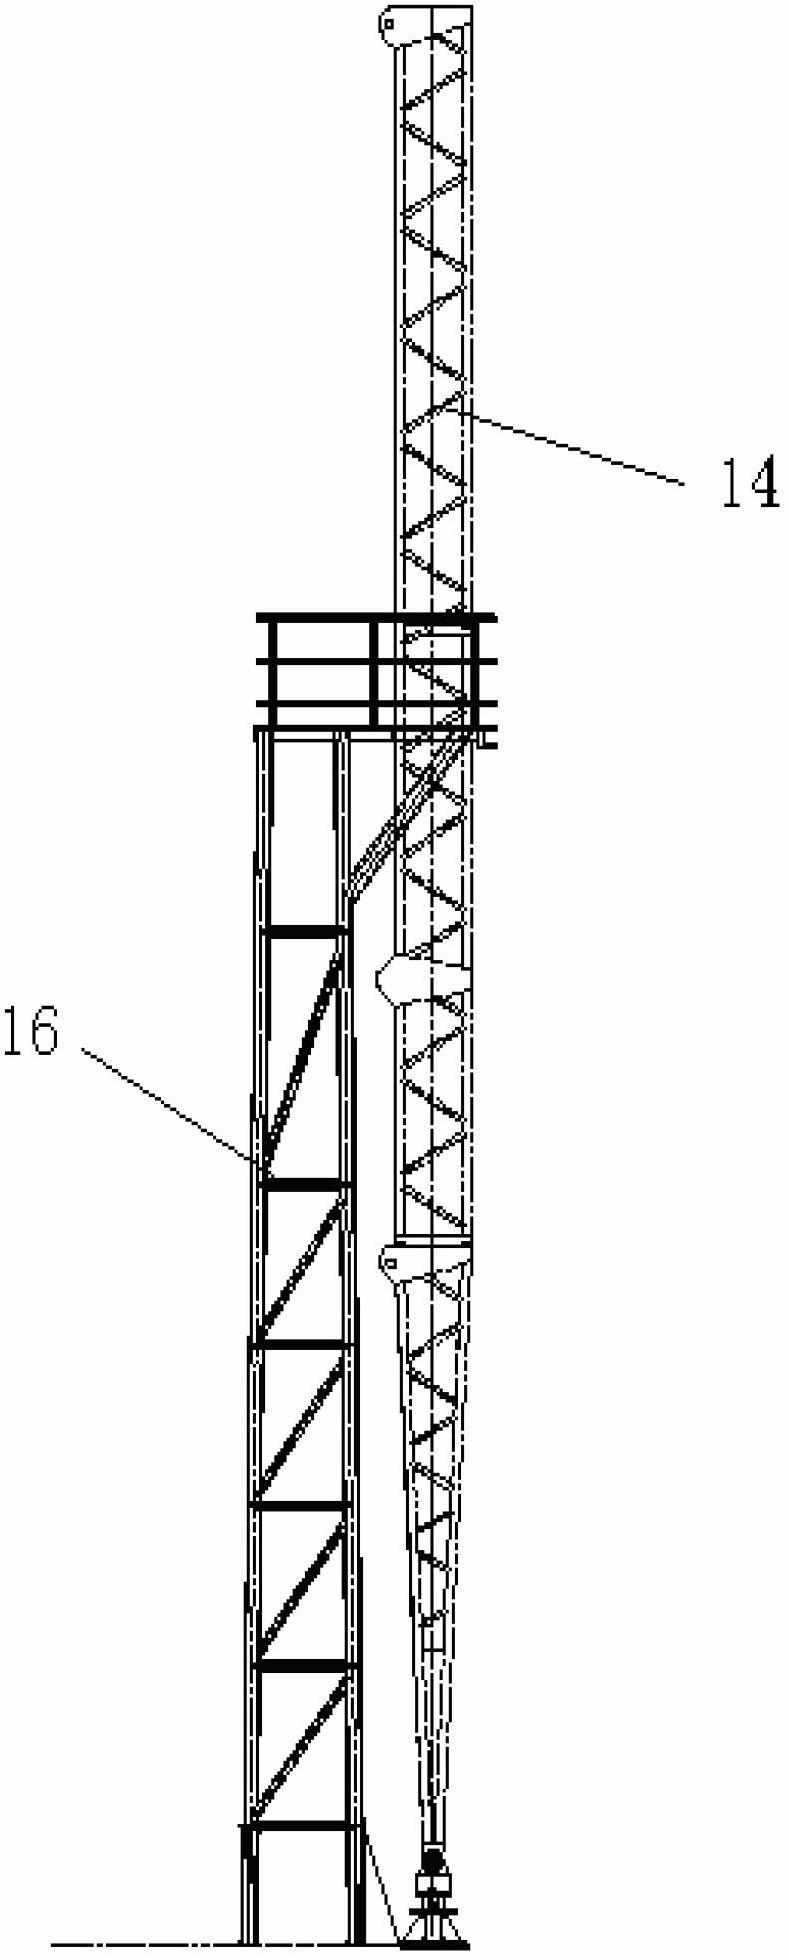 Columnar combustion arm guardrail